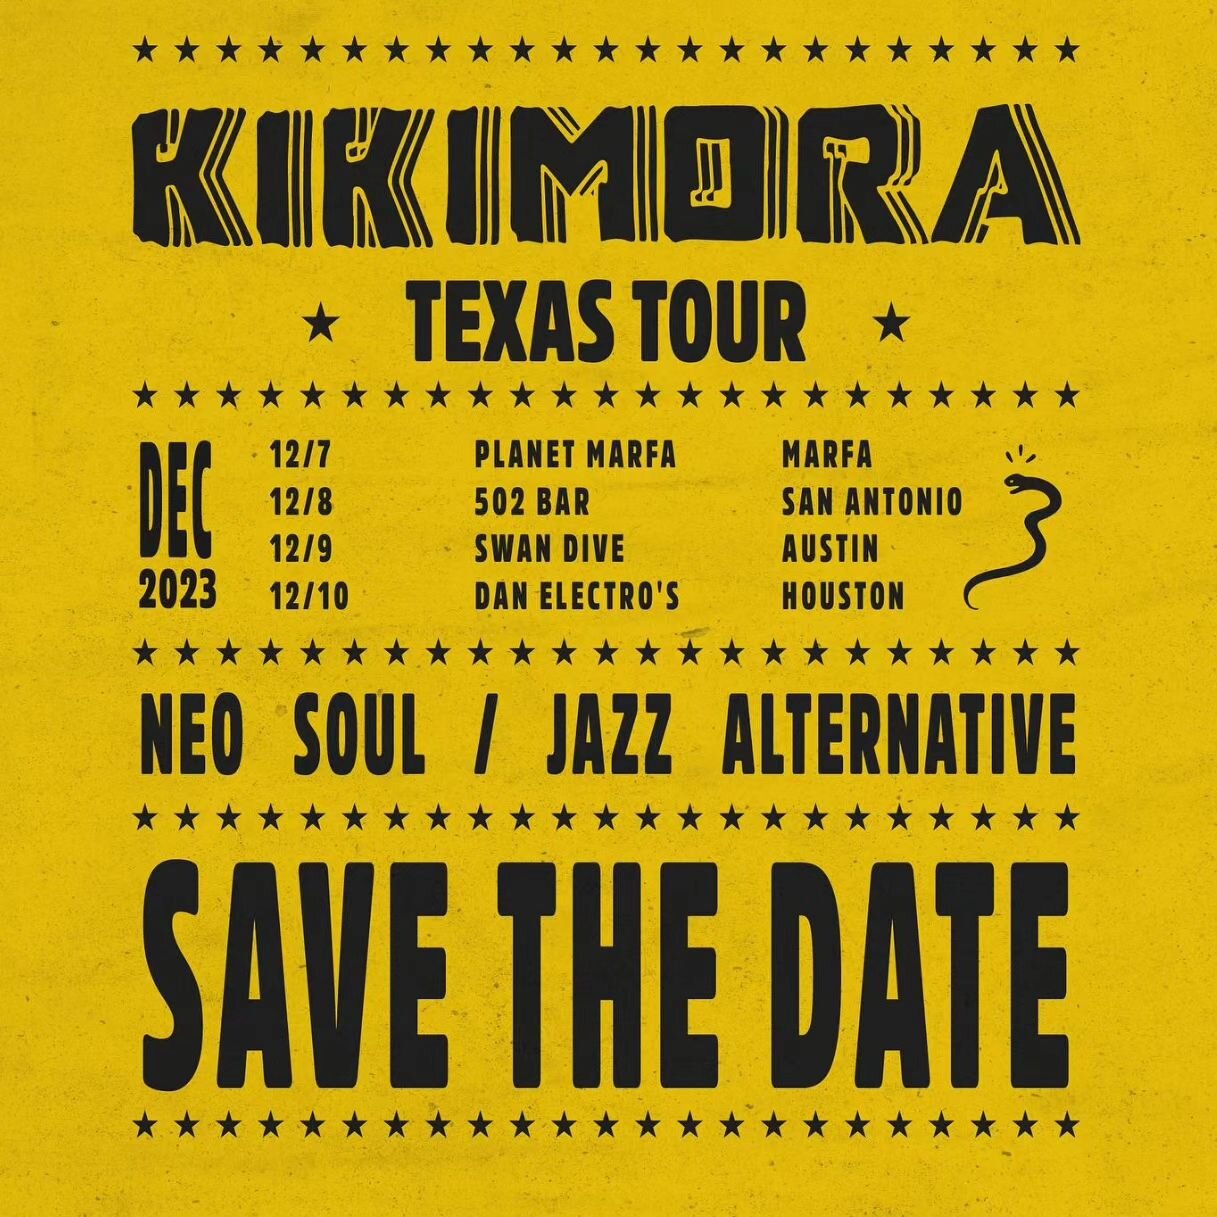 Sunday December 10th 8PM

Neo Soul / Jazz Alternative

@kikimoramusic